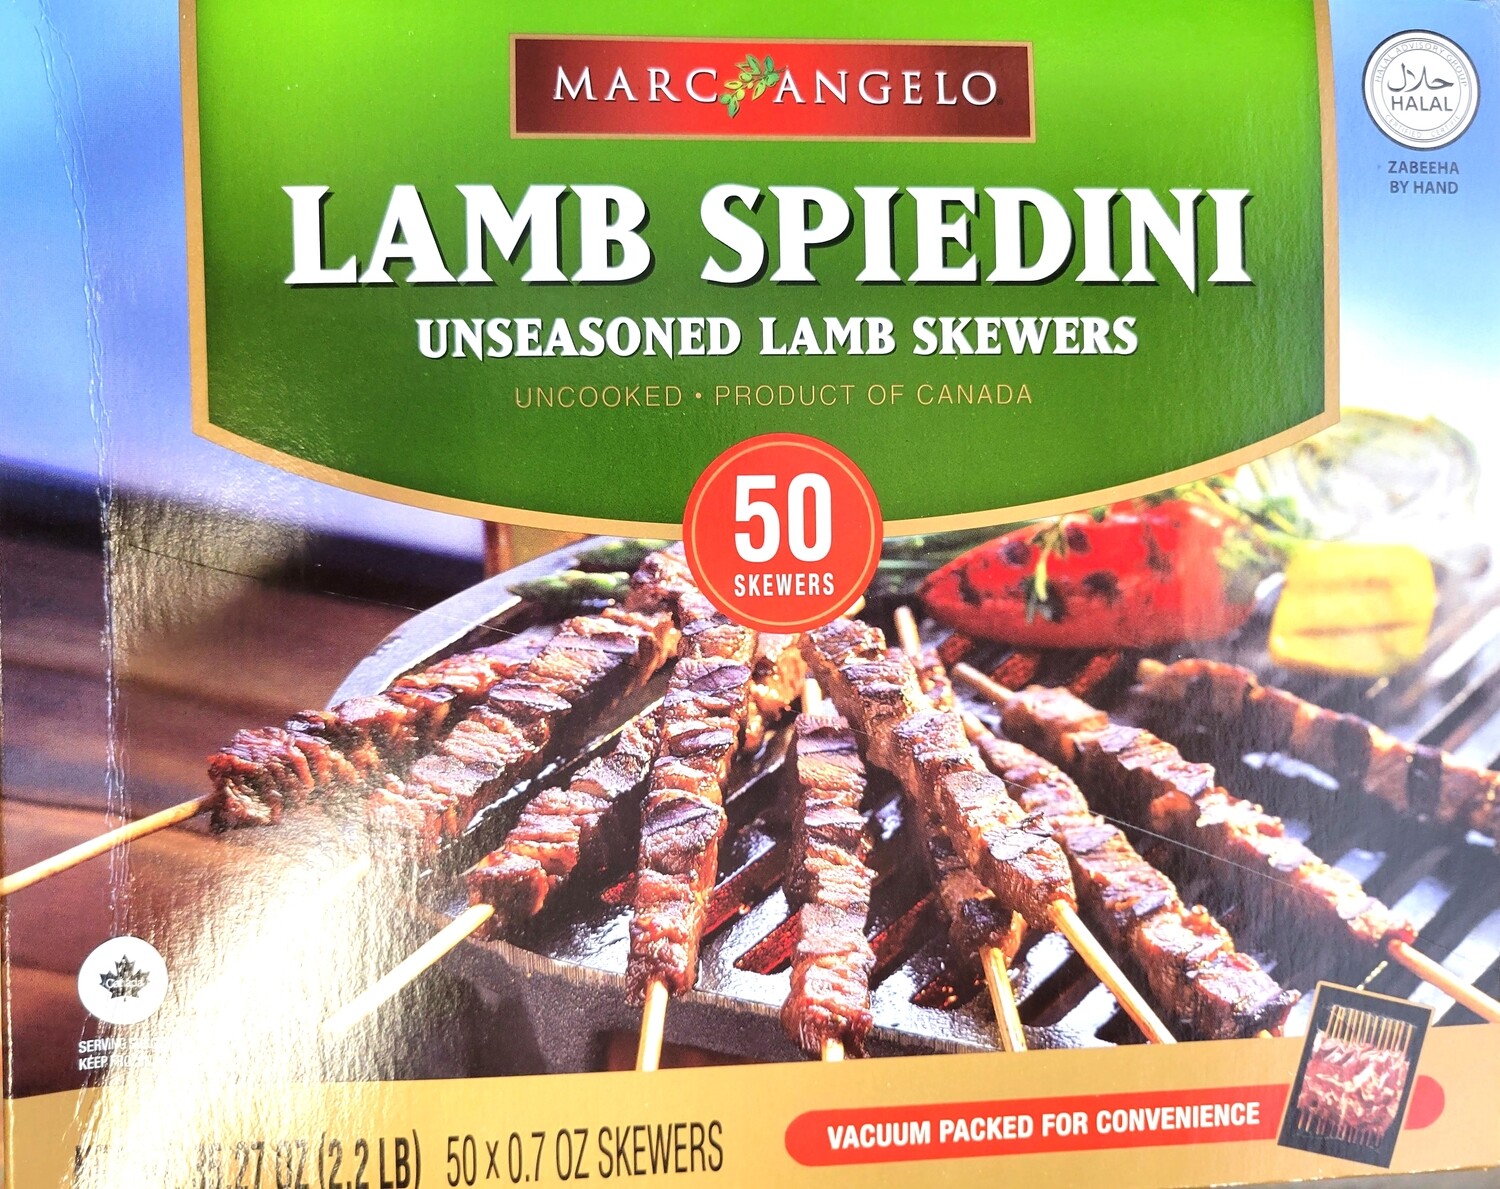 Marc Angelo Lamb Spiedini Unseasoned Lamb Skewers 50 pieces - Halal -Zabiha by Hand 2.2lbs Total